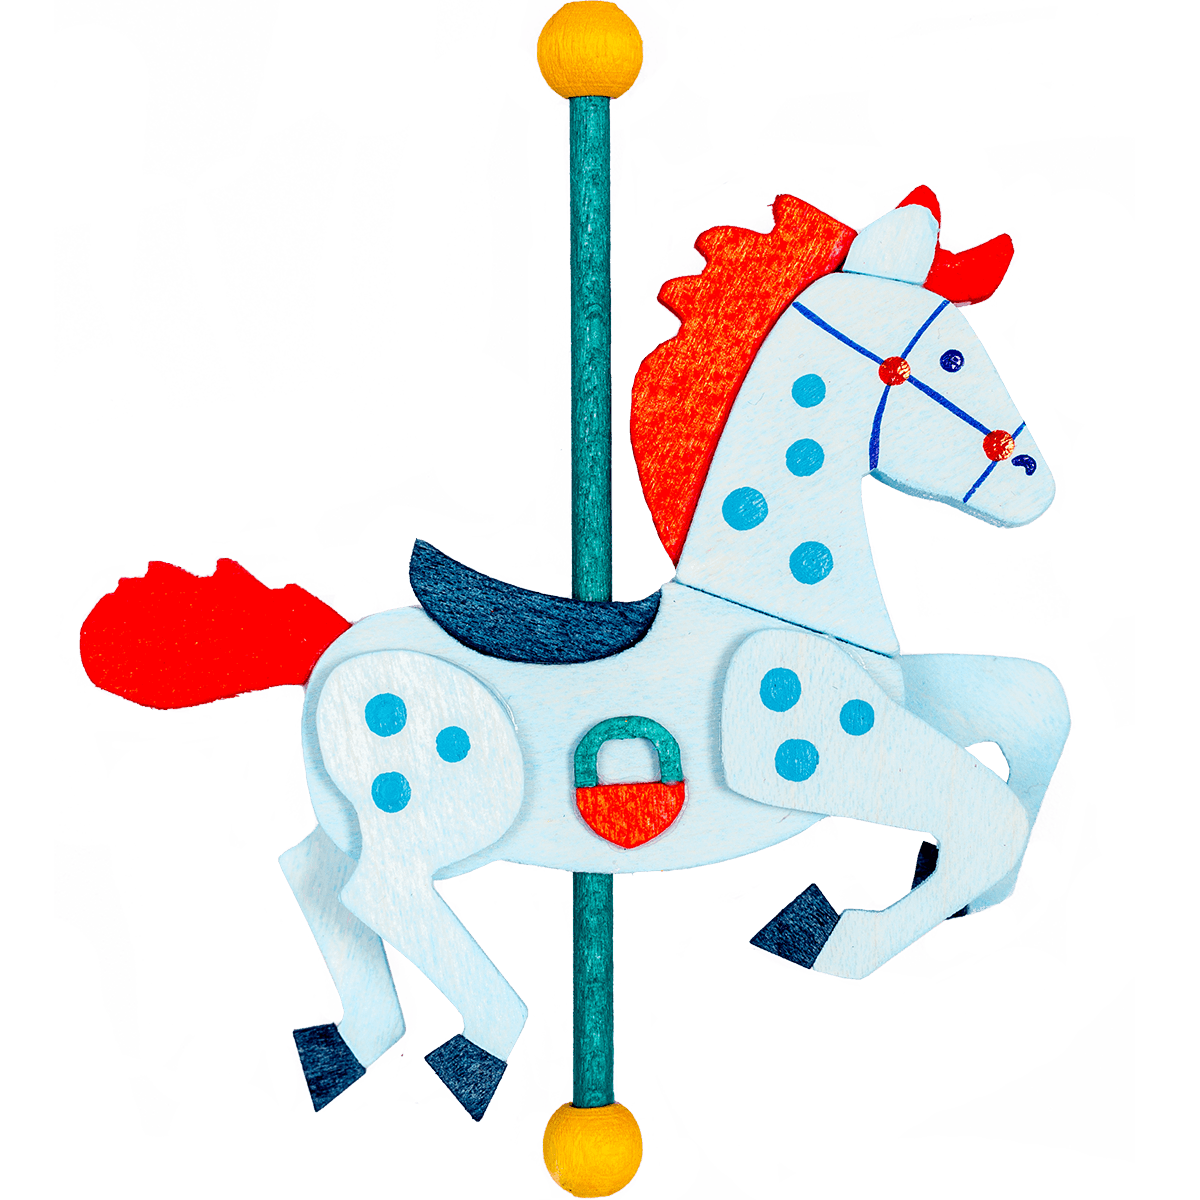 Carousel Horse Ornament by Graupner Holzminiaturen